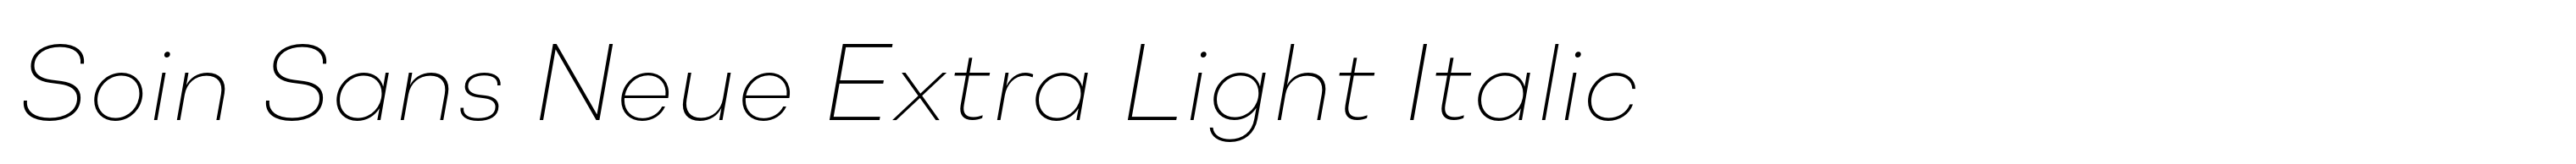 Soin Sans Neue Extra Light Italic